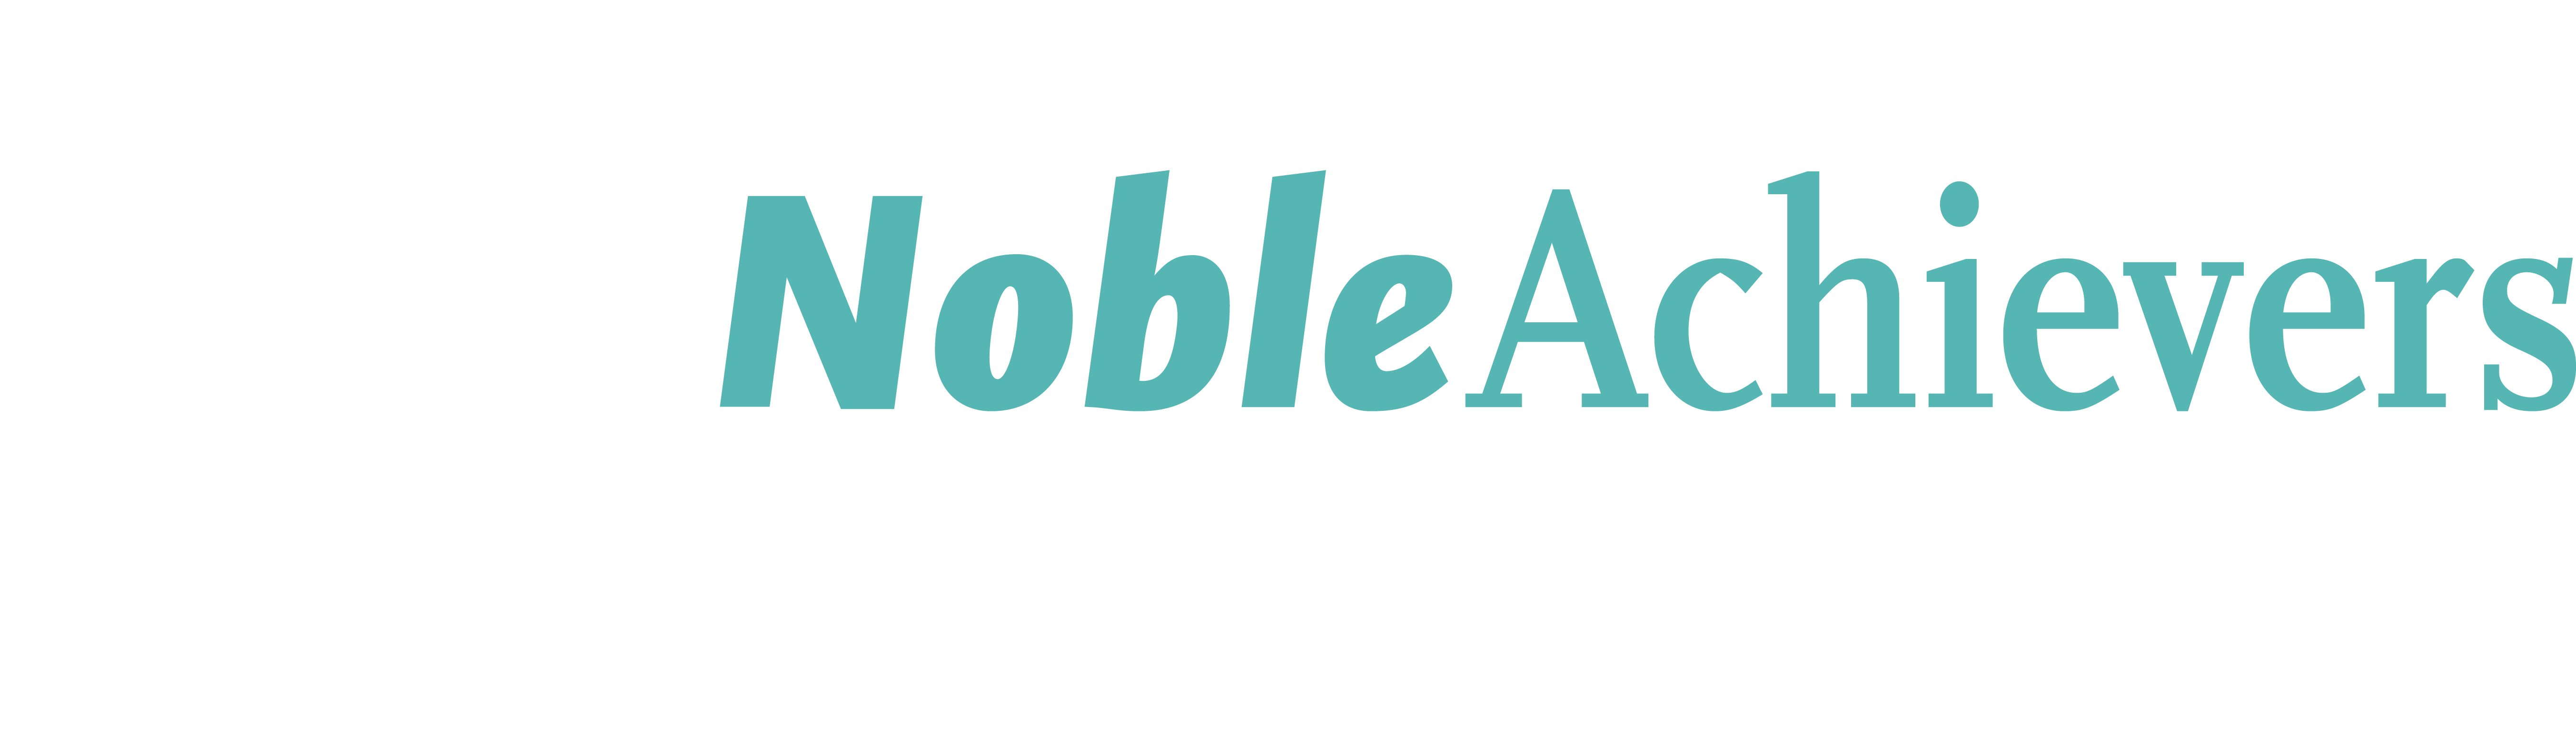 Noble Achievers